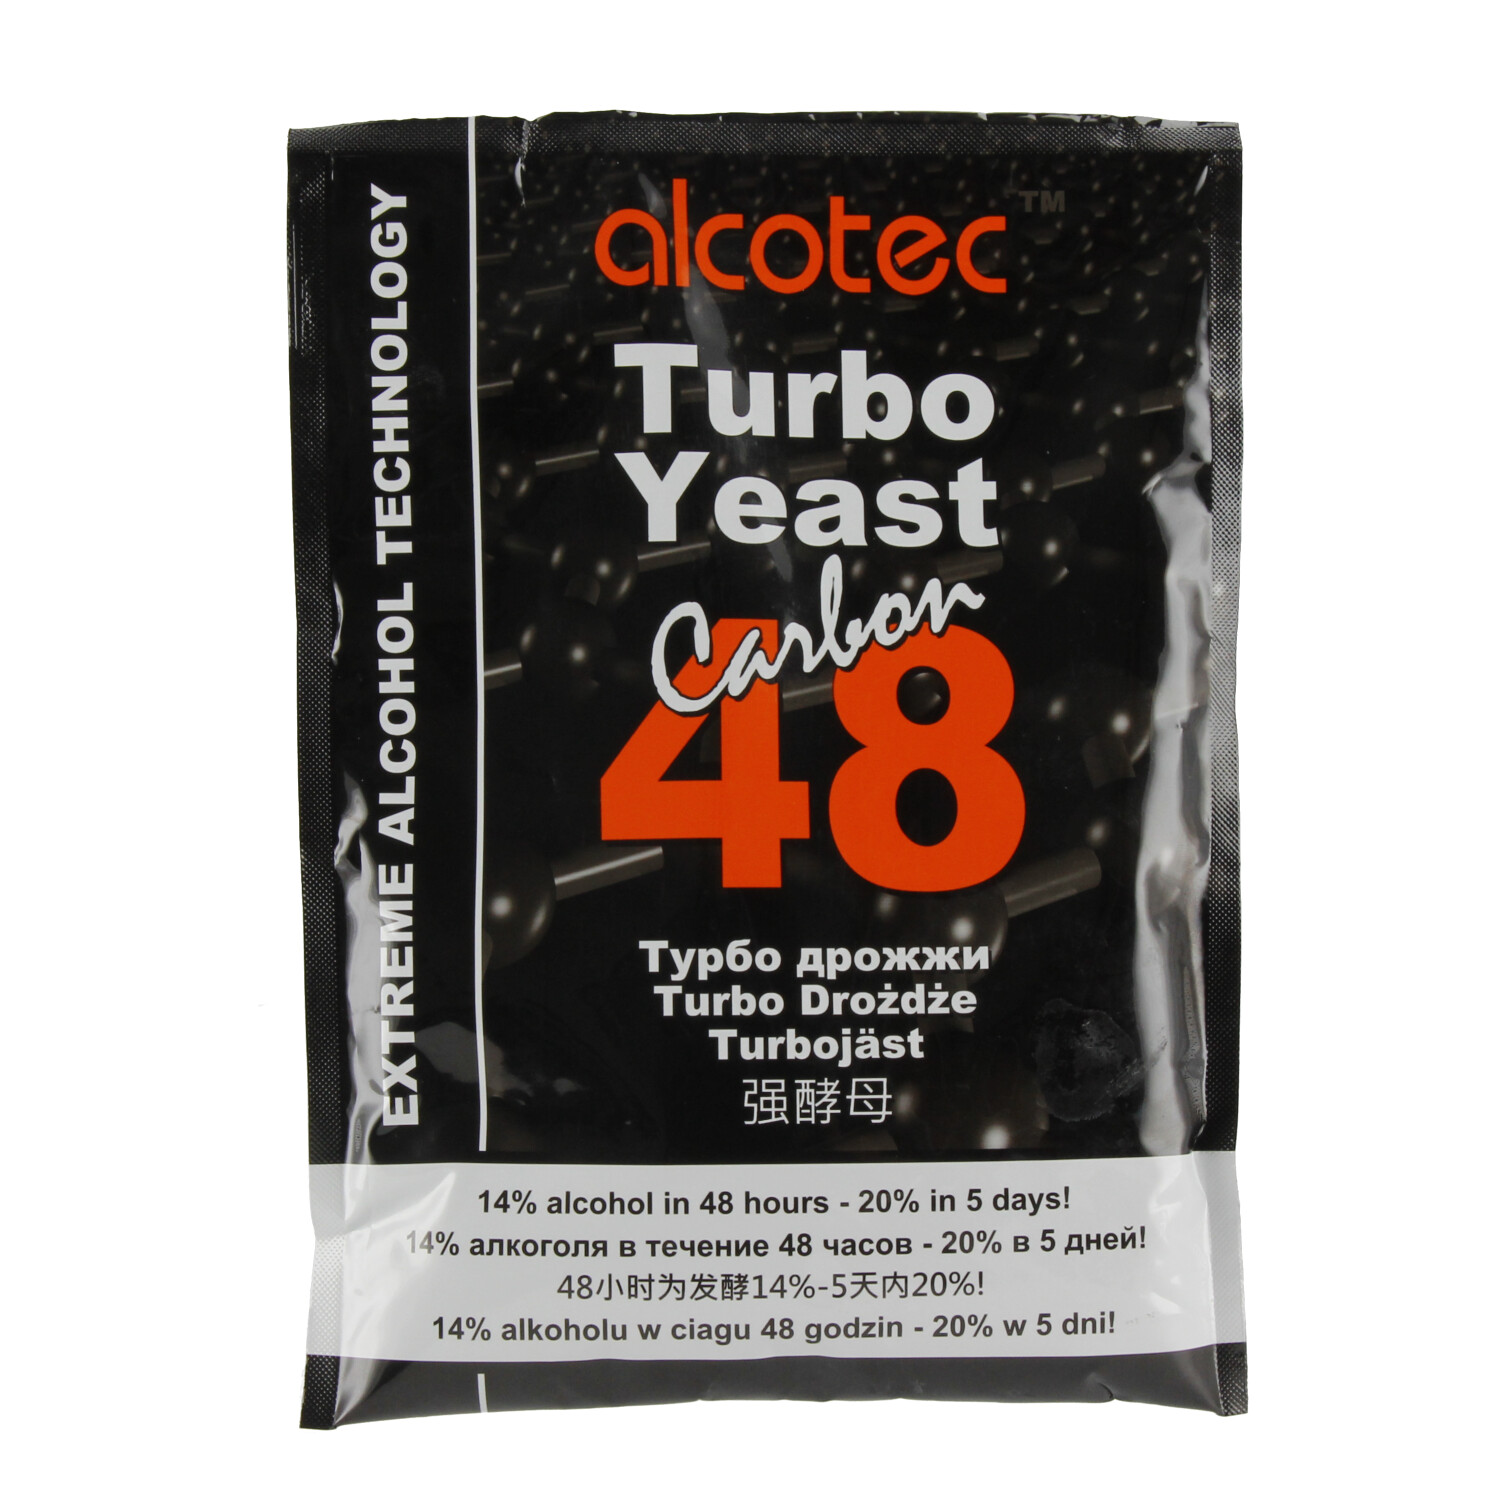 Alcotec 48 Carbon Turbo Yeast